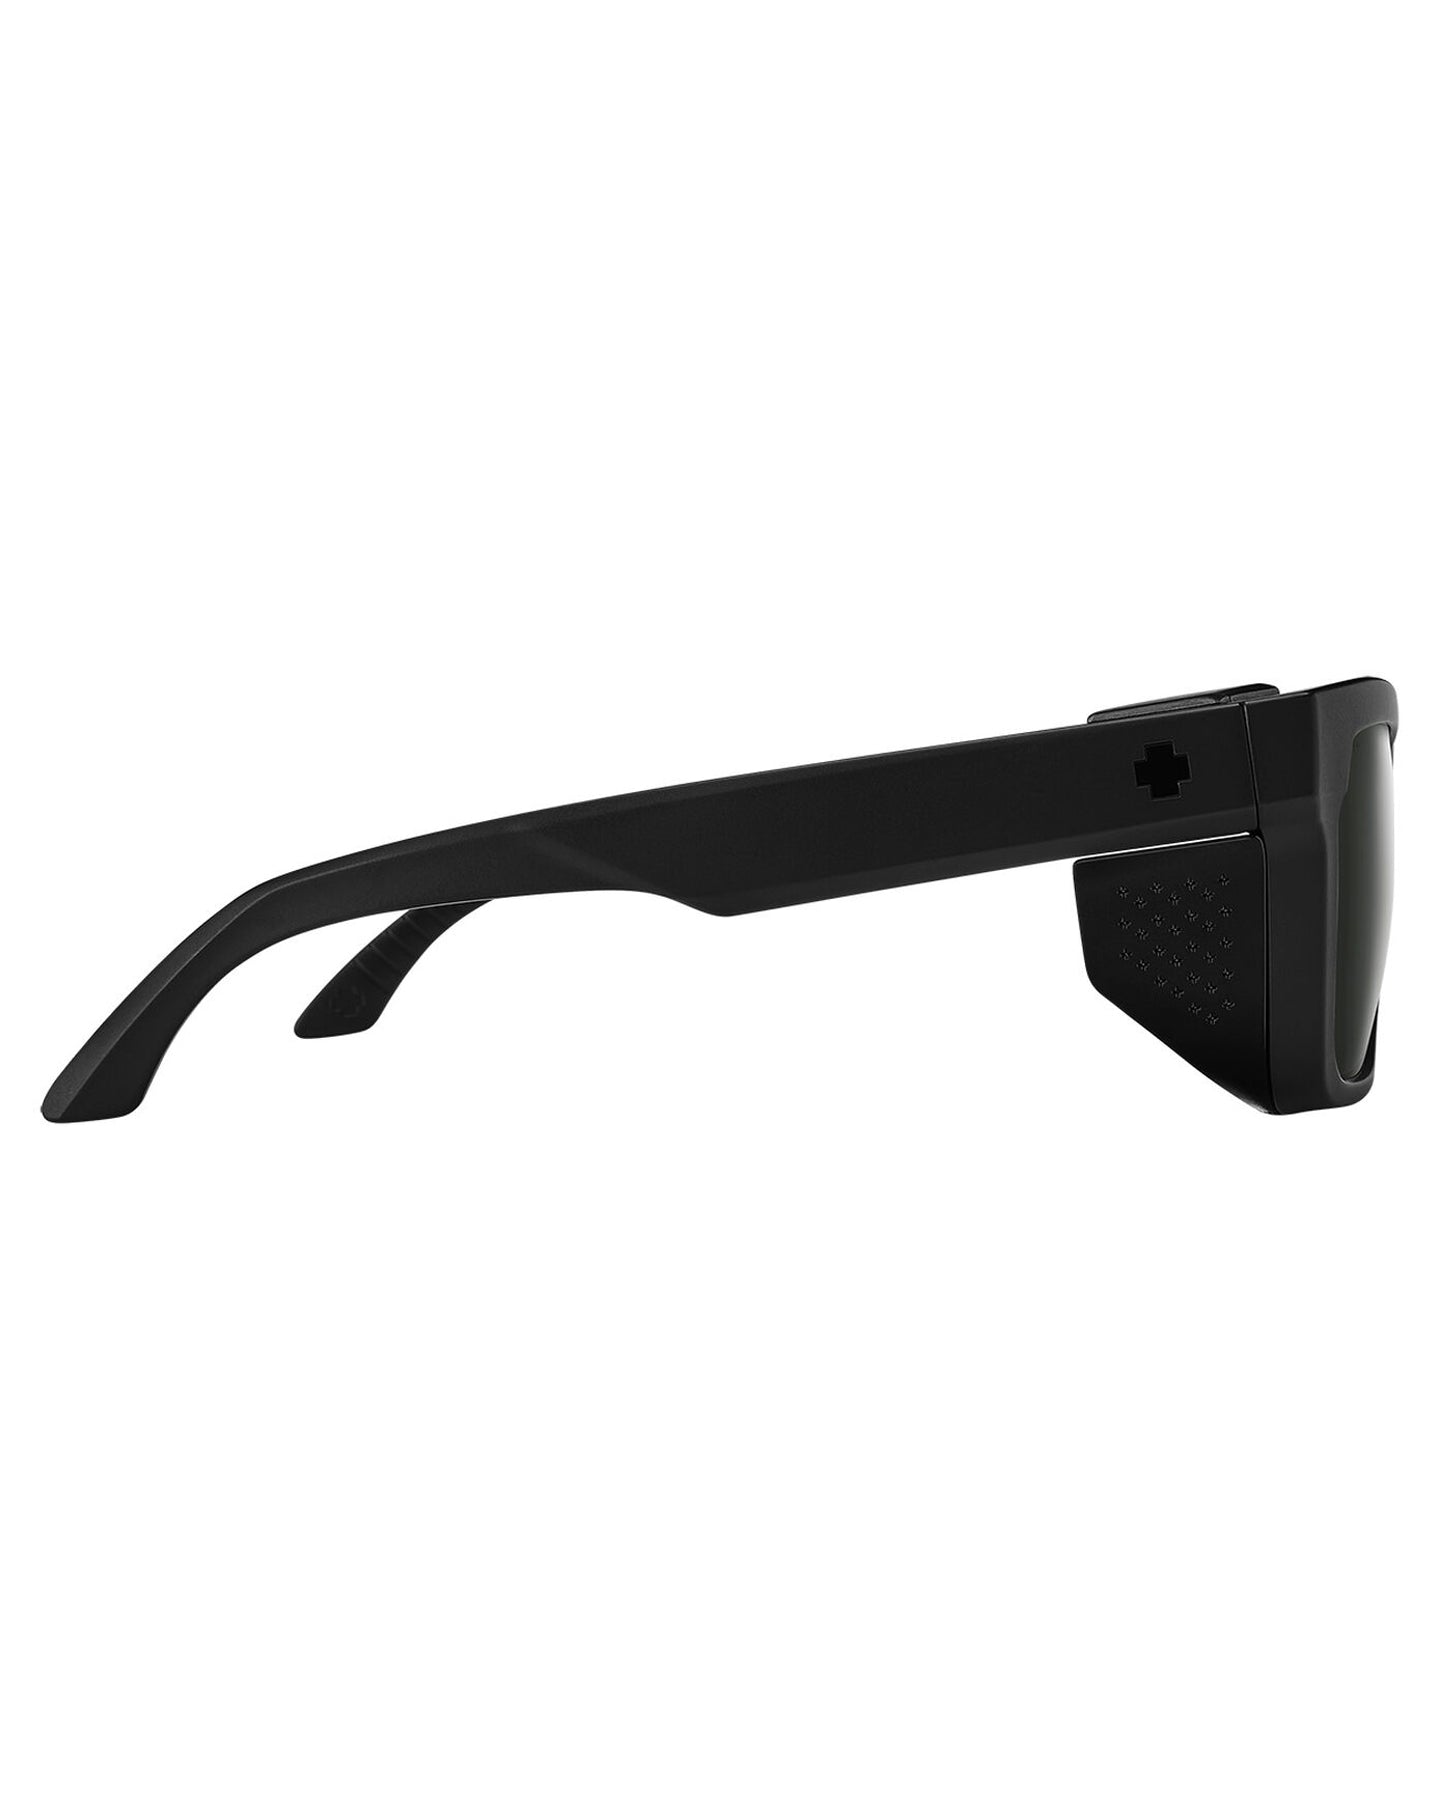 Spy Helm Tech Matte Black Happy Gray Green Black Spectra Mirror Sunglasses - SnowSkiersWarehouse